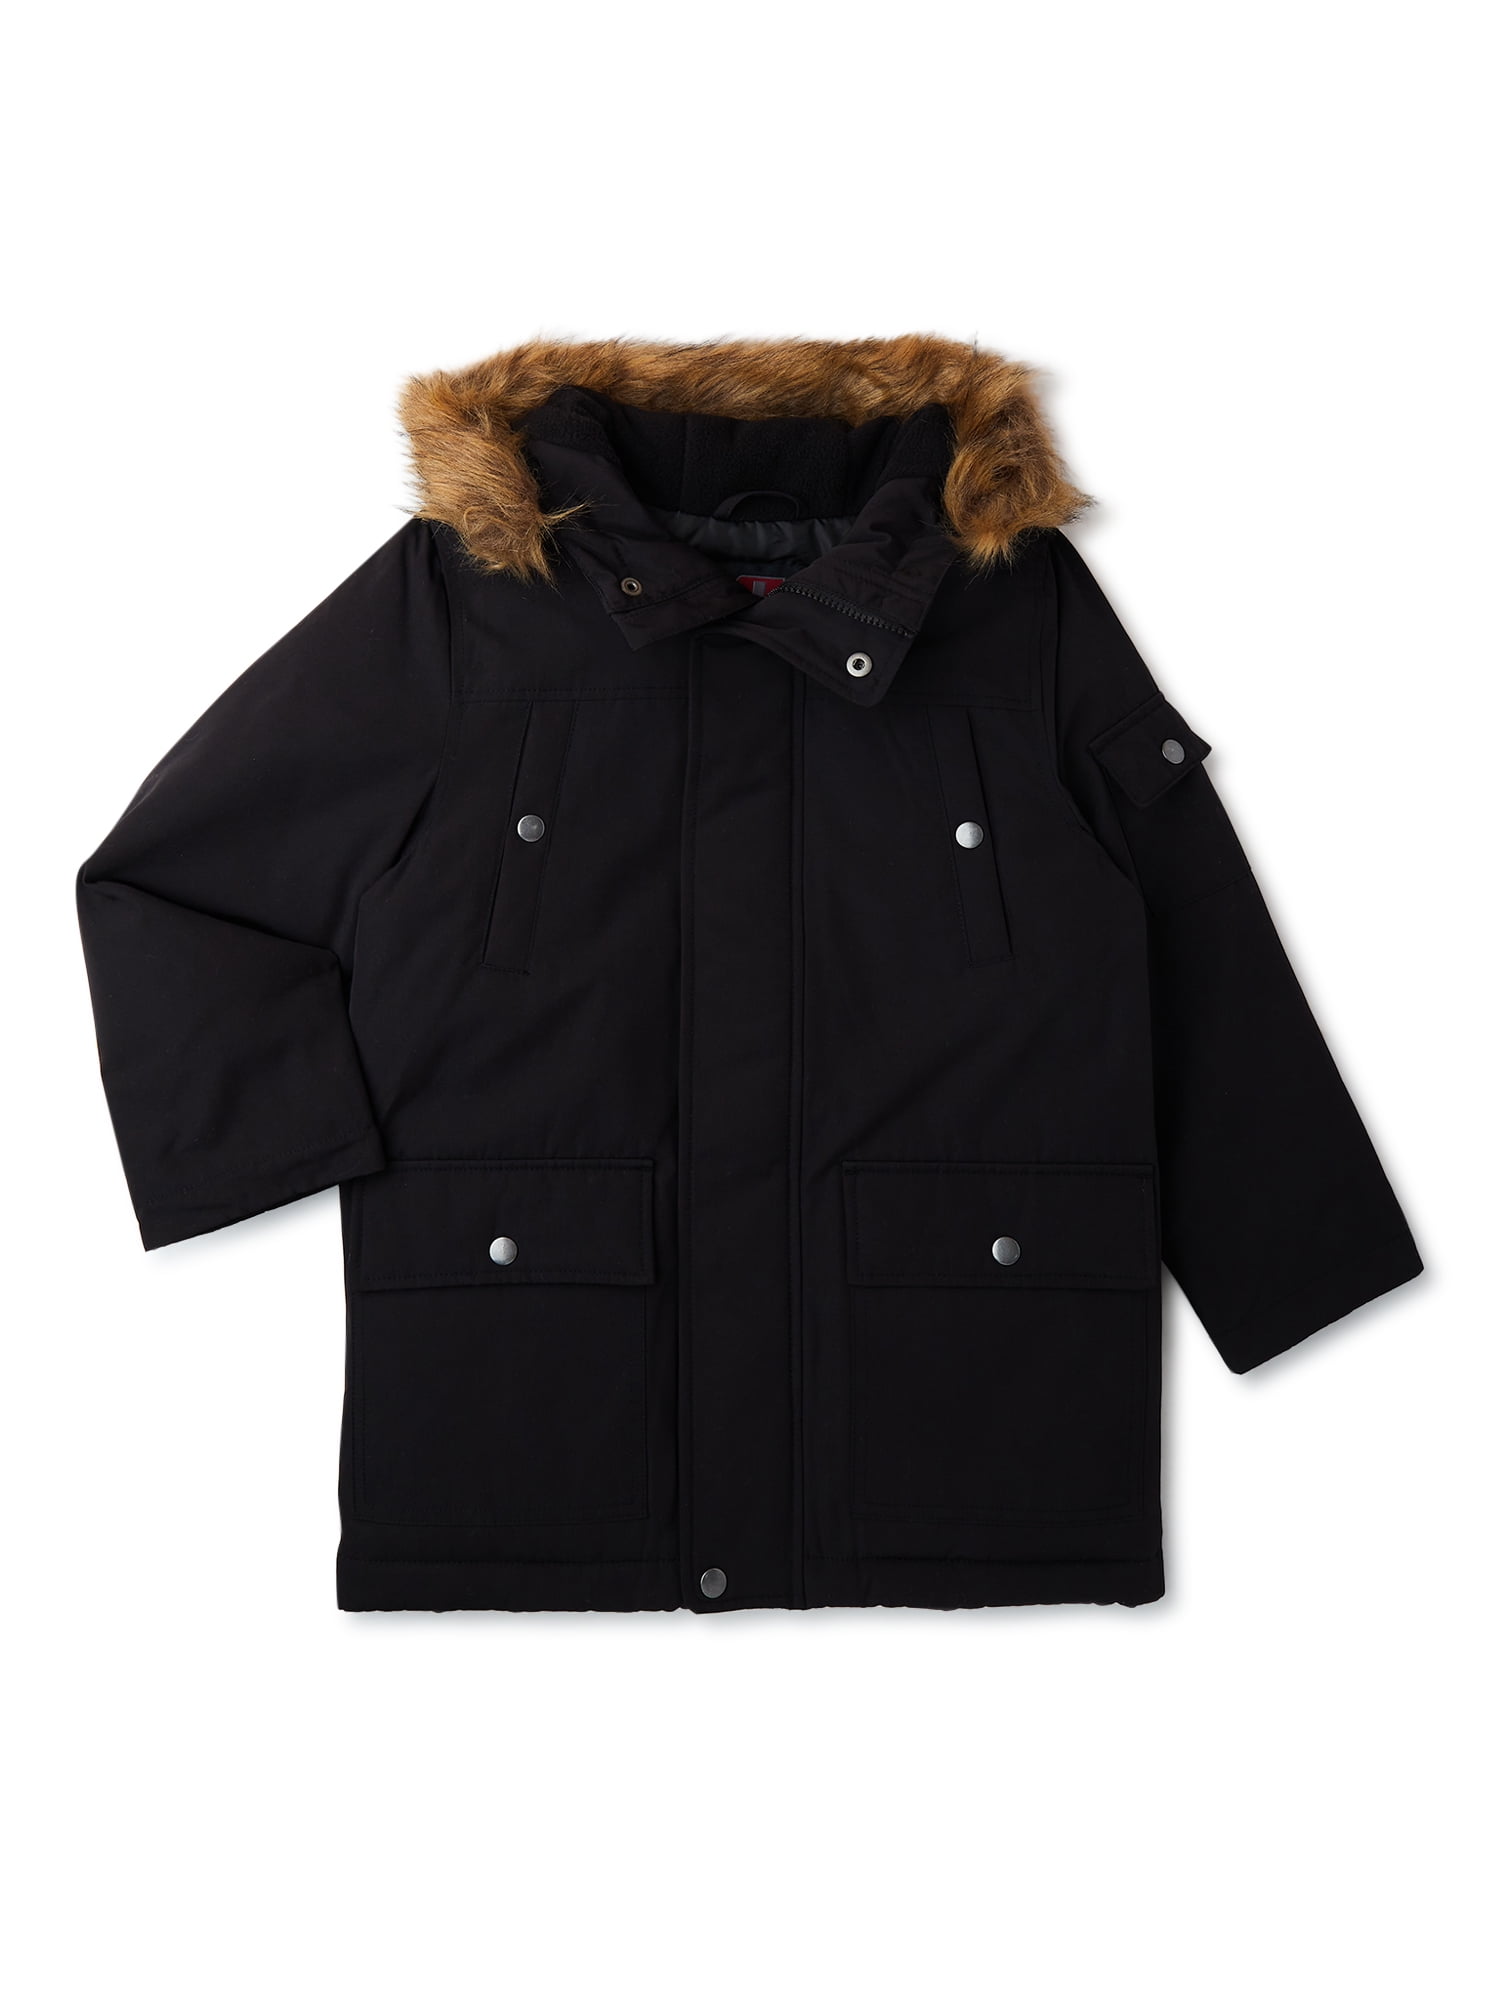 Buy Swiss Tech Boys Winter Parka Jacket, Sizes 4-18 & Husky Online at ...